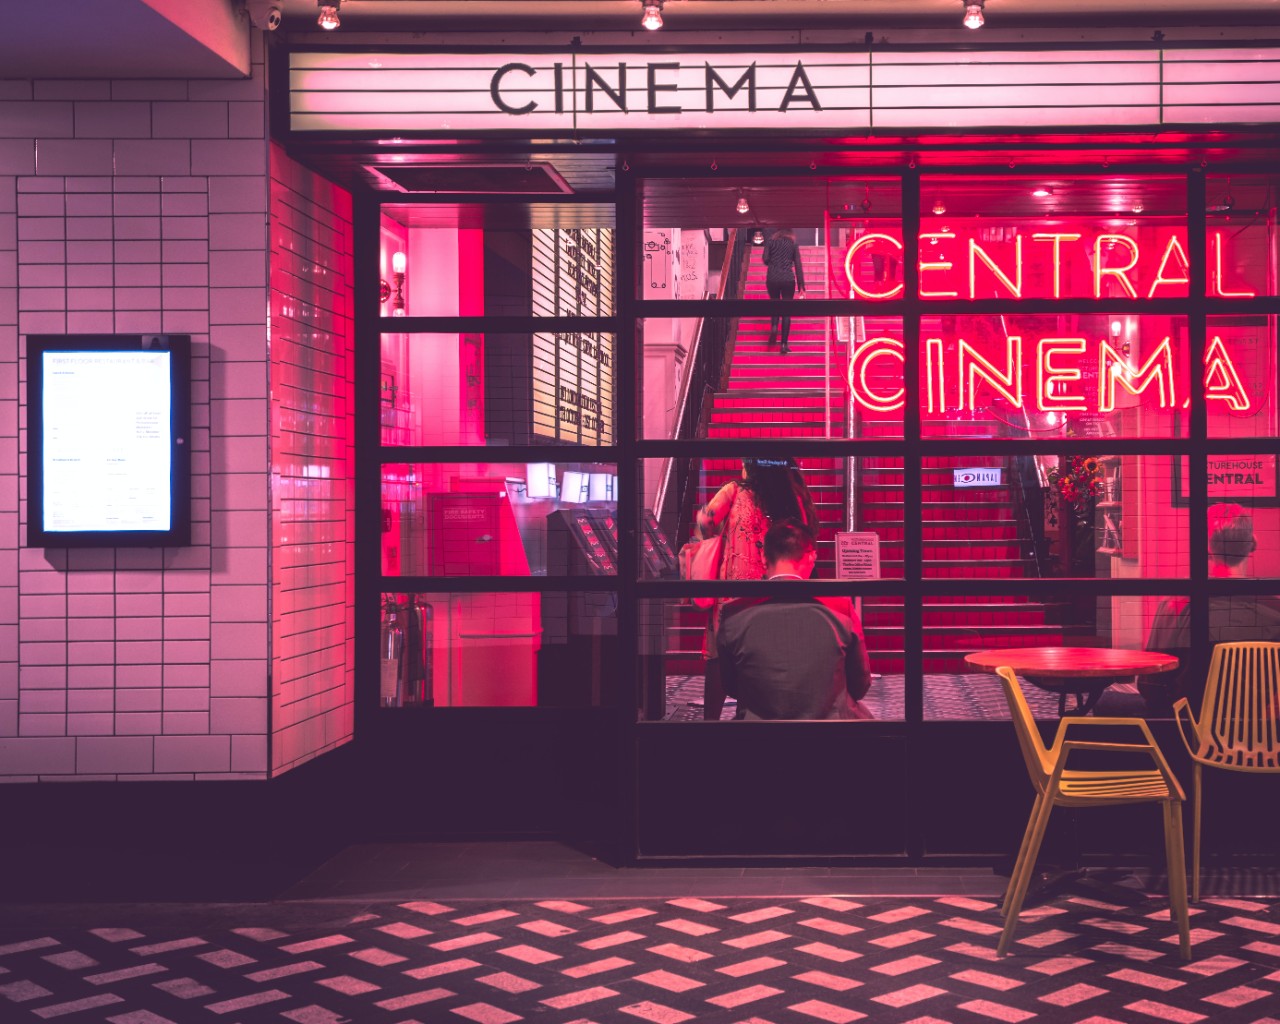 Cinema entrance